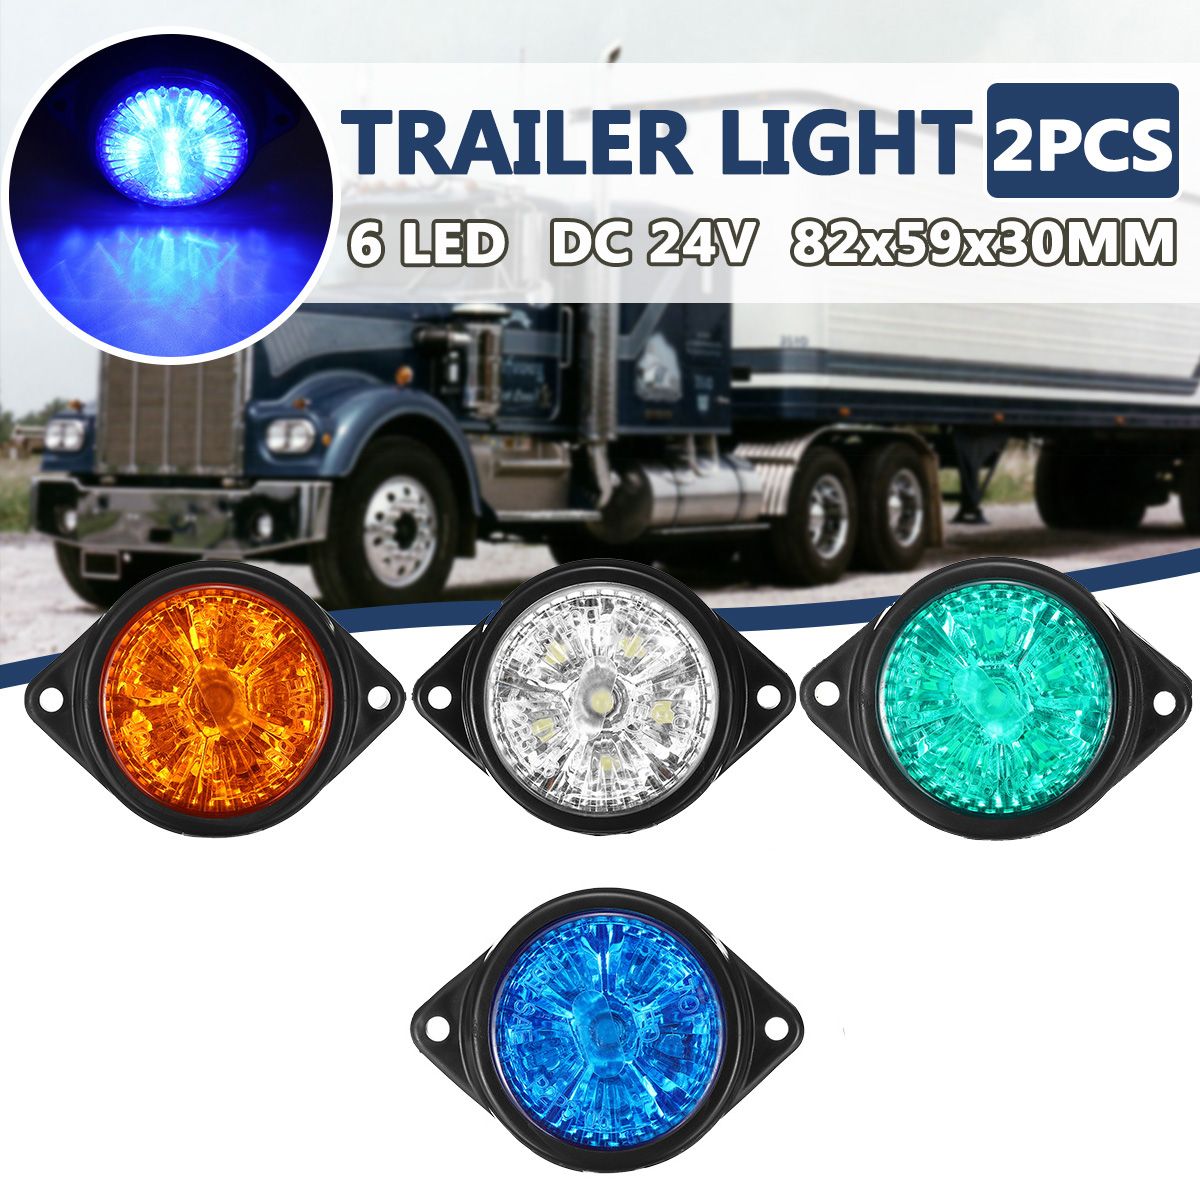 2PCS-24V-6-LED-Trailer-Rear-Tail-Stop-Light-Indicator-Lights-For-Caravan-Truck-Van-1742174